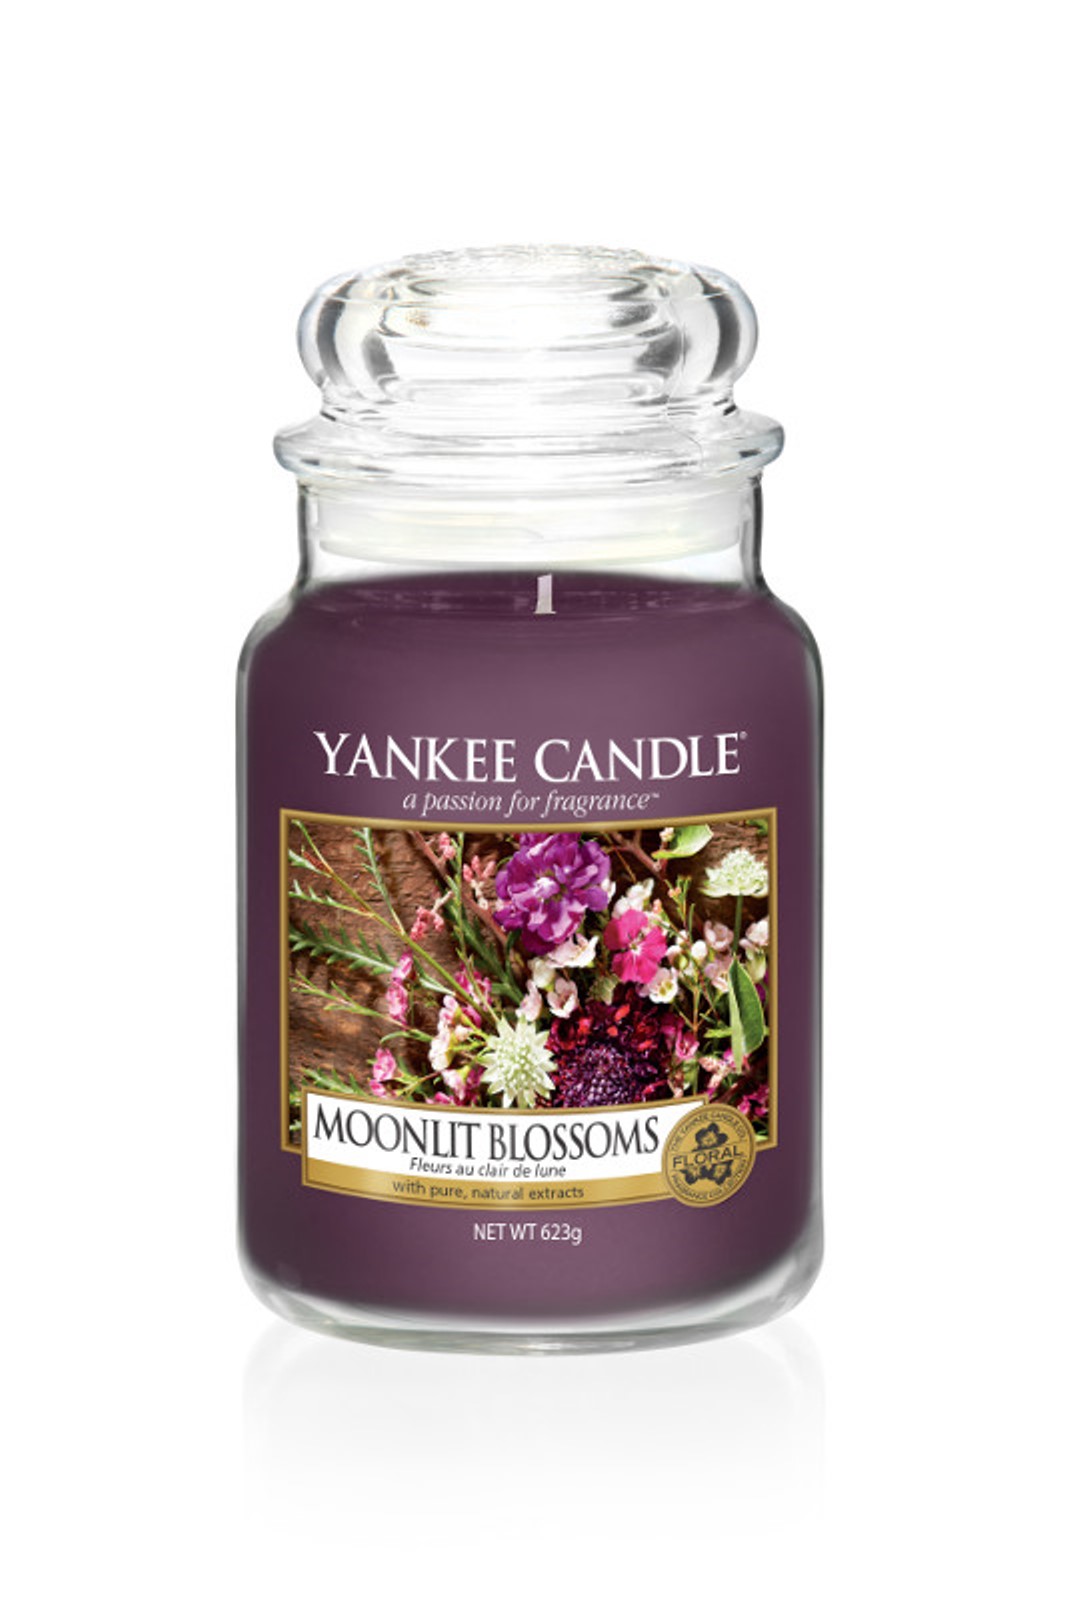 Свеча ароматизированная Yankee Candle 